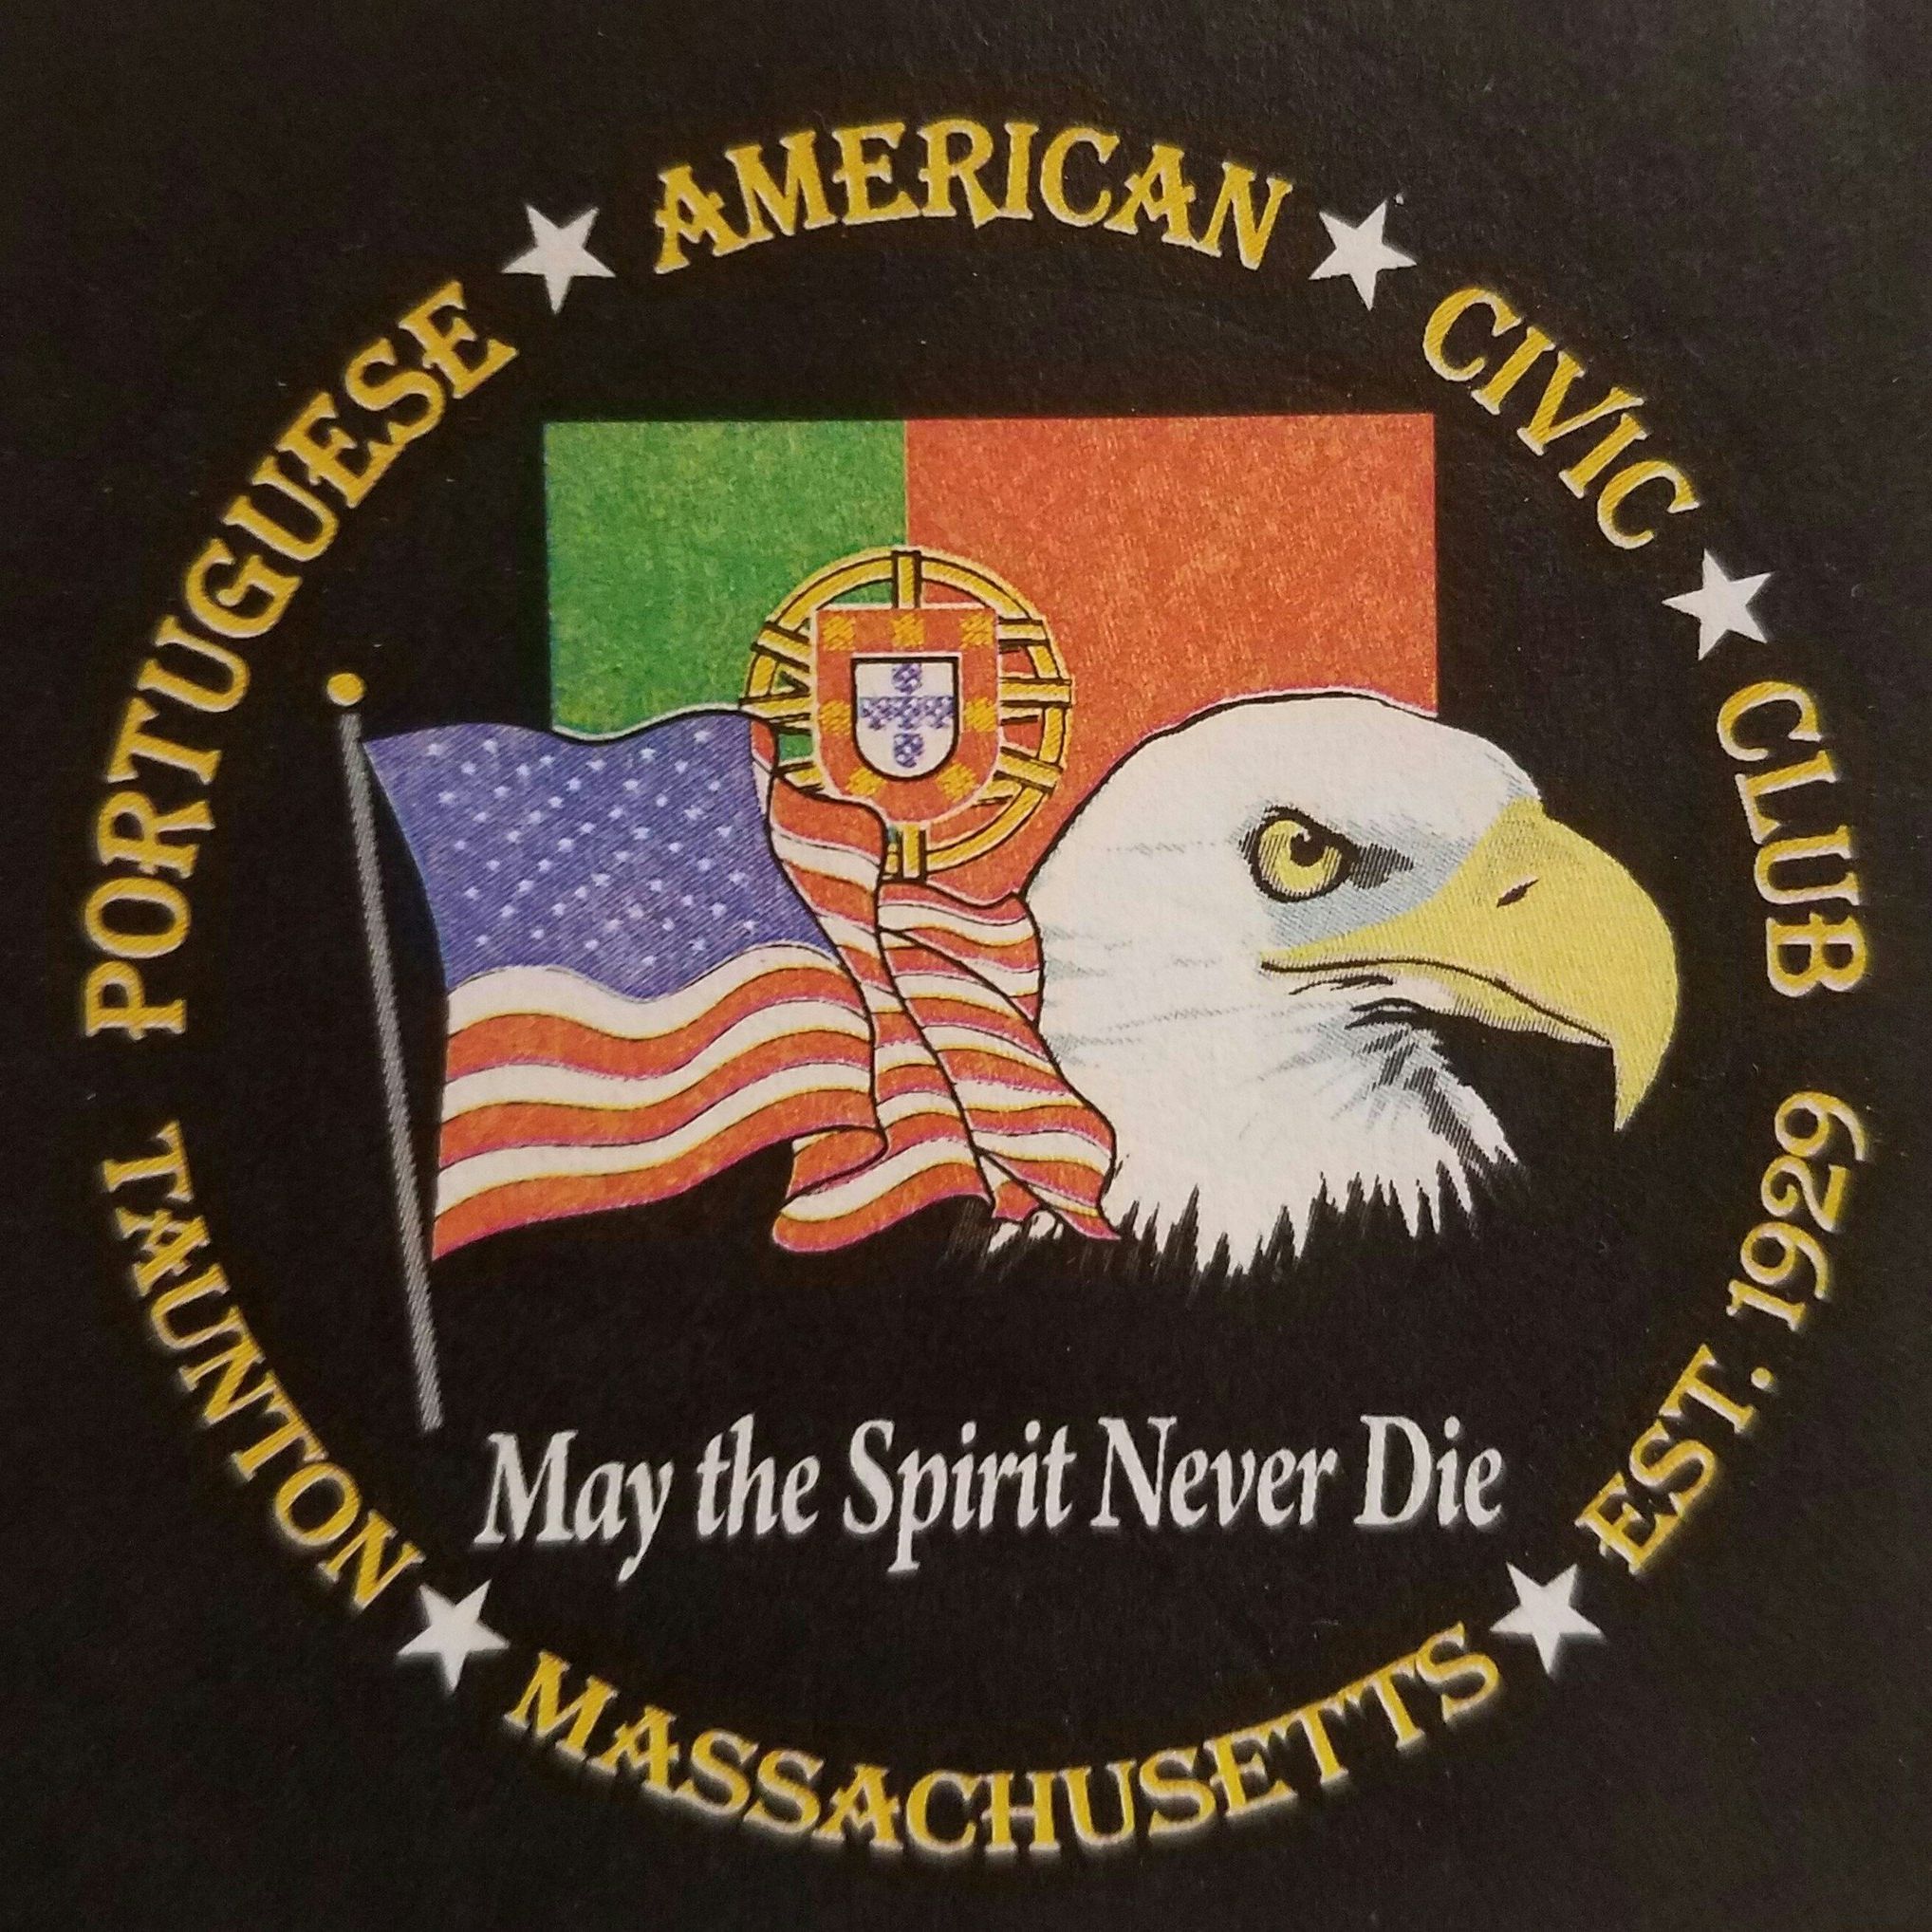 Portuguese Speaking Organizations in Massachusetts - Taunton Portuguese-American Civic Club, Inc.